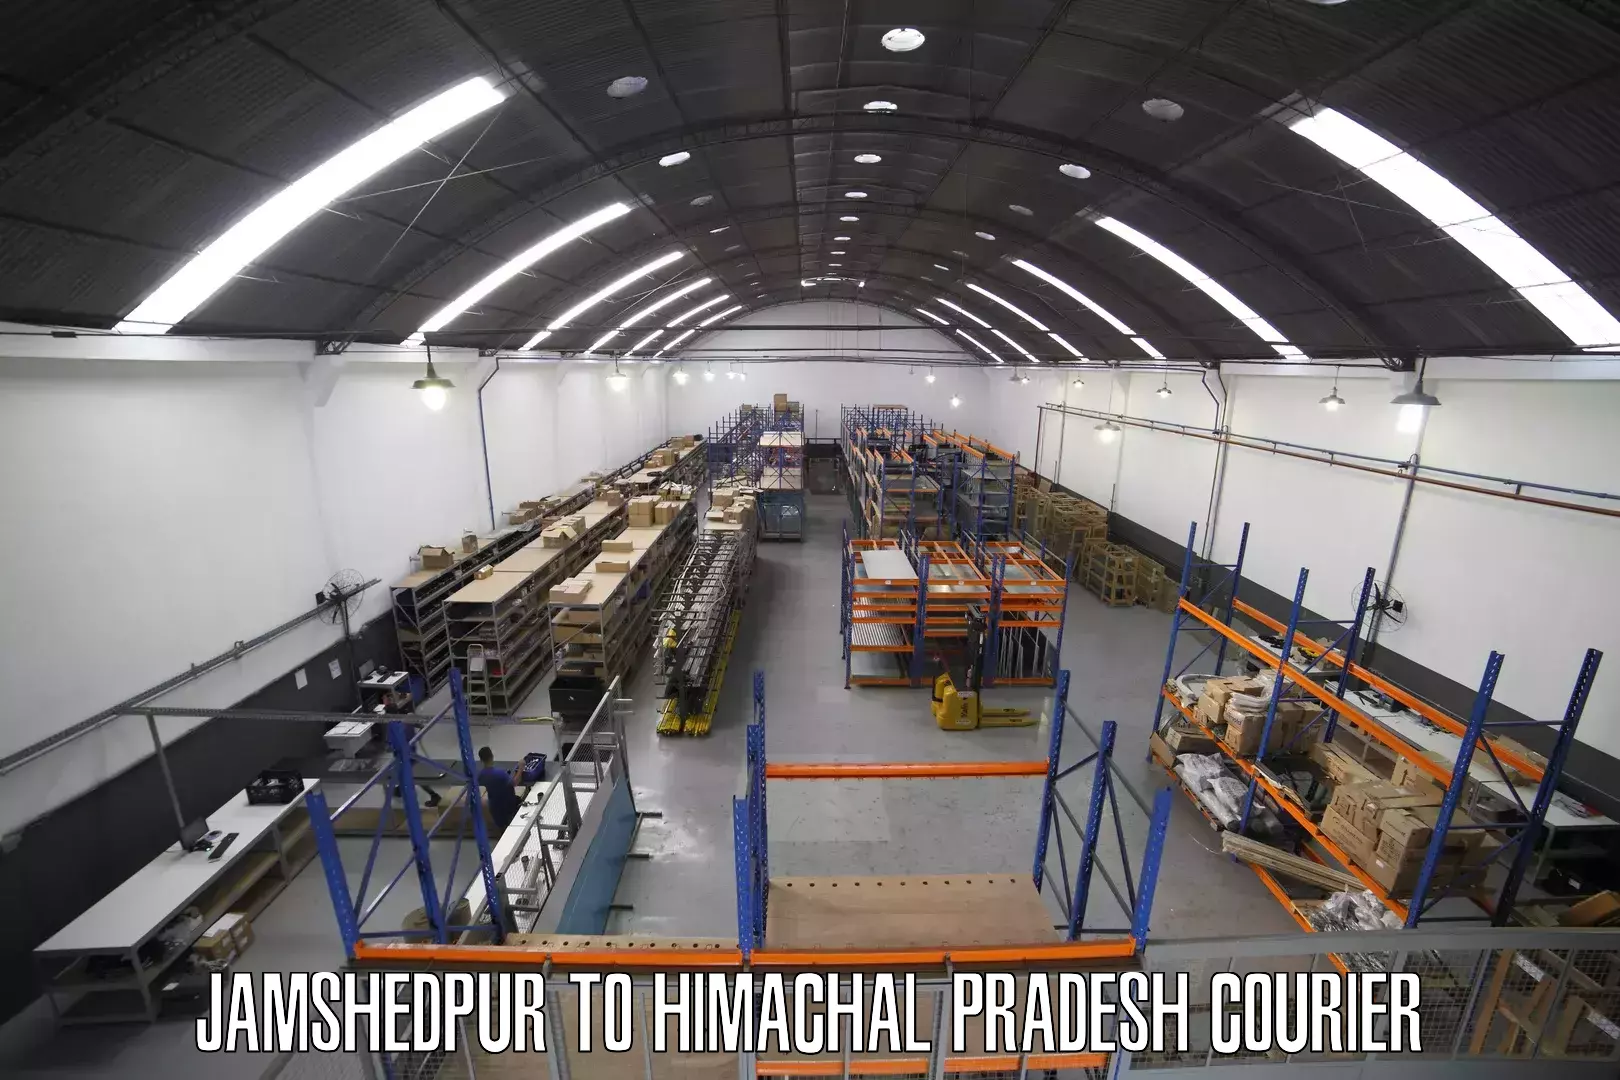 Courier service comparison Jamshedpur to Himachal Pradesh